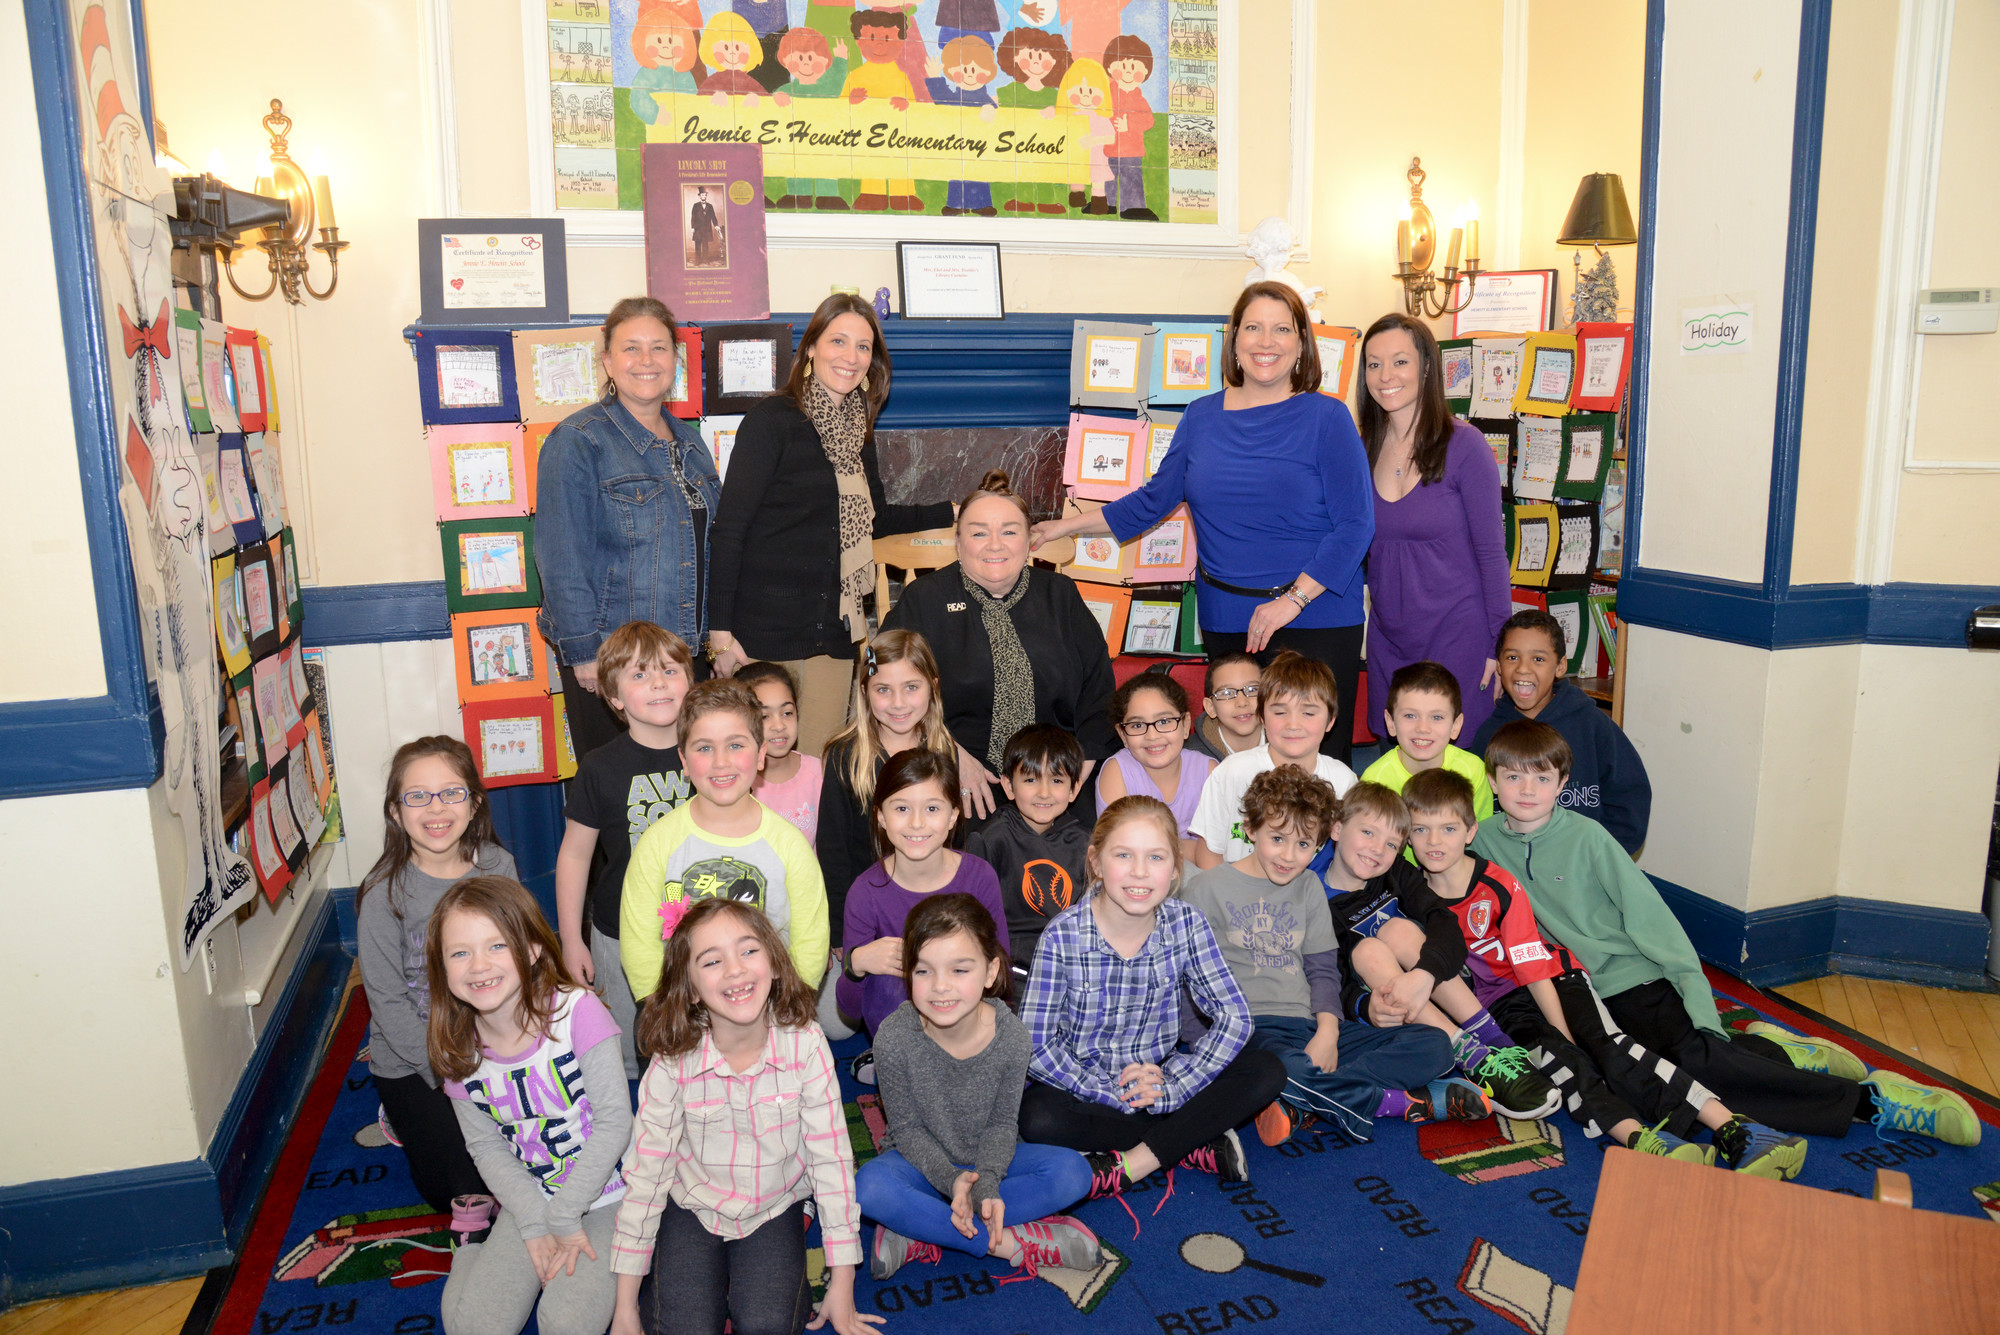 Author Patricia Polacco, center, with Barbara Jay, Tina Rekus, Elizabeth Pryke, Rebecca Bauer and Bauer’s second grade class.